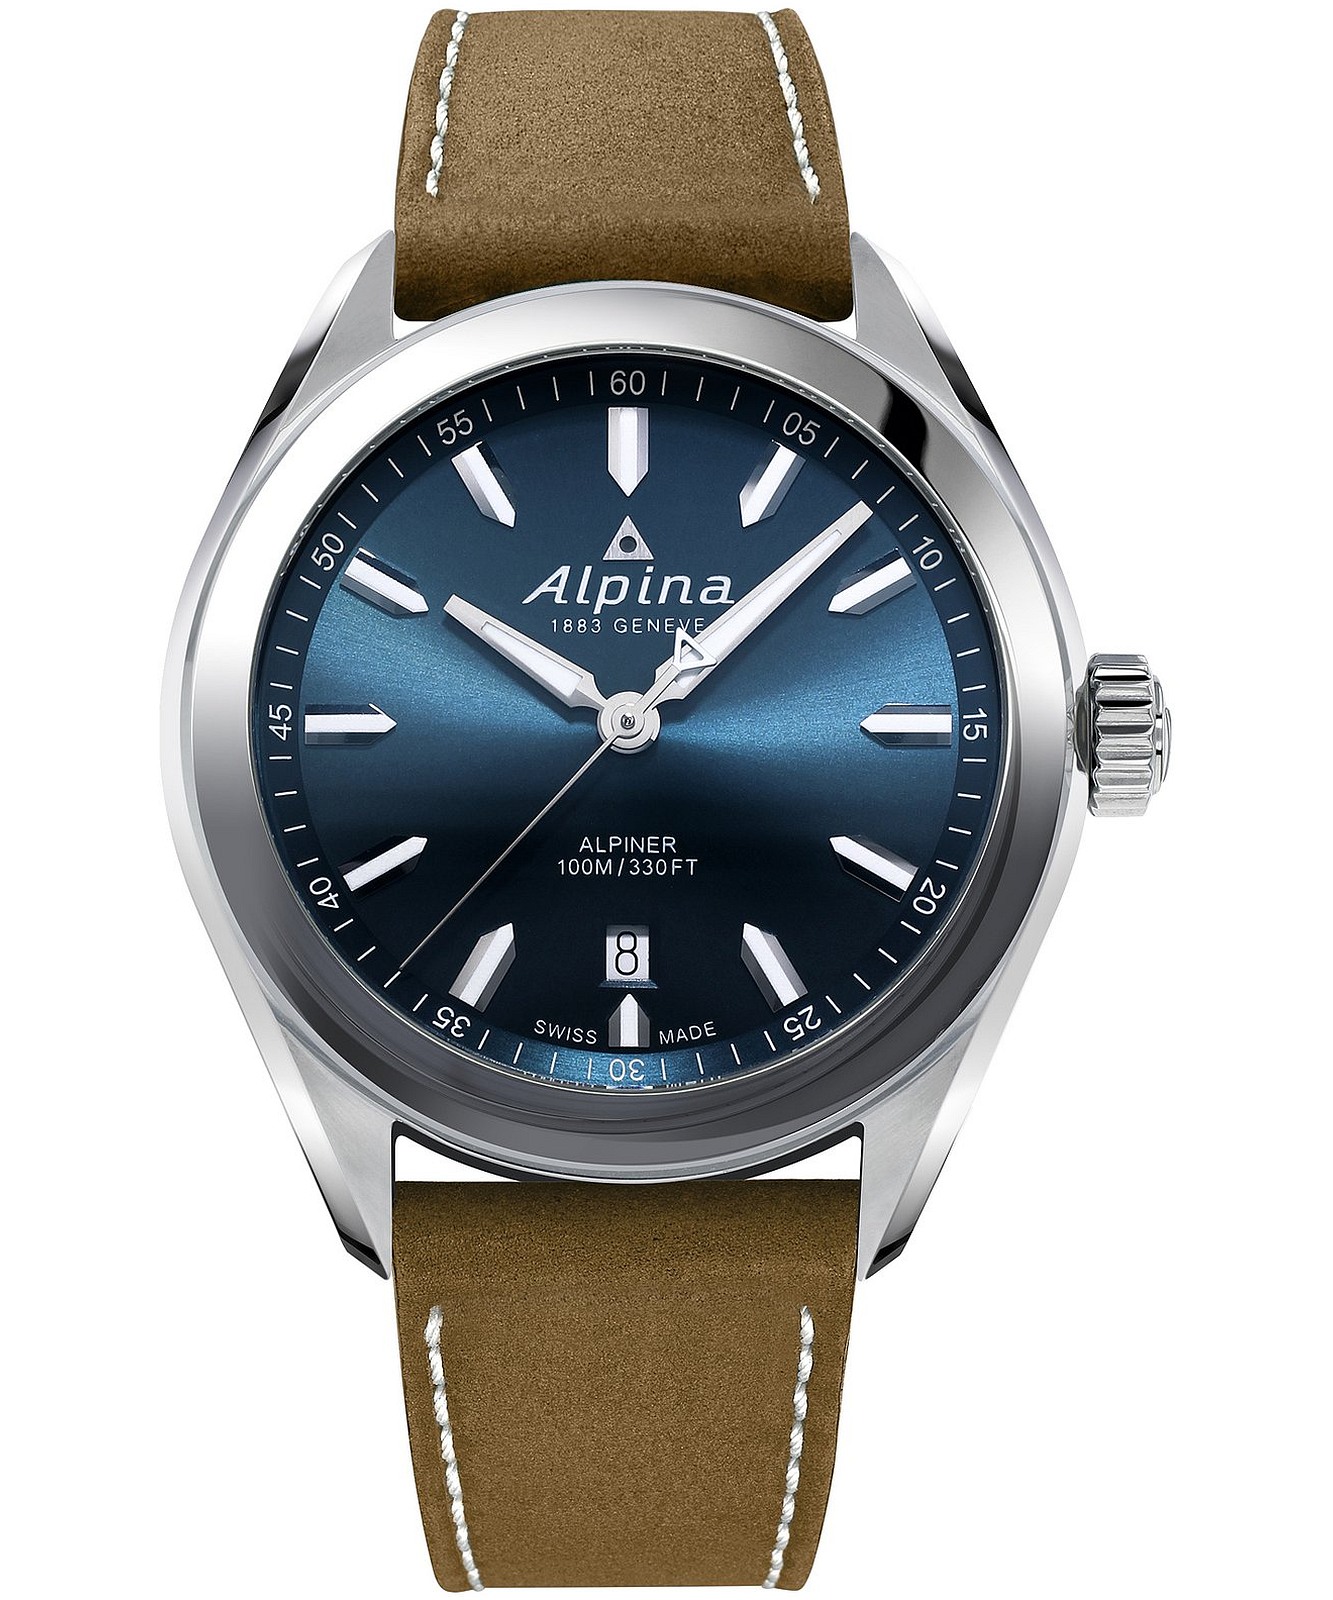 Alpina часы. Alpina Alpiner Quartz часы. Альпина альпинер. Часы Альпина альпинер кварц. Alpina Alpiner Leather Strap.